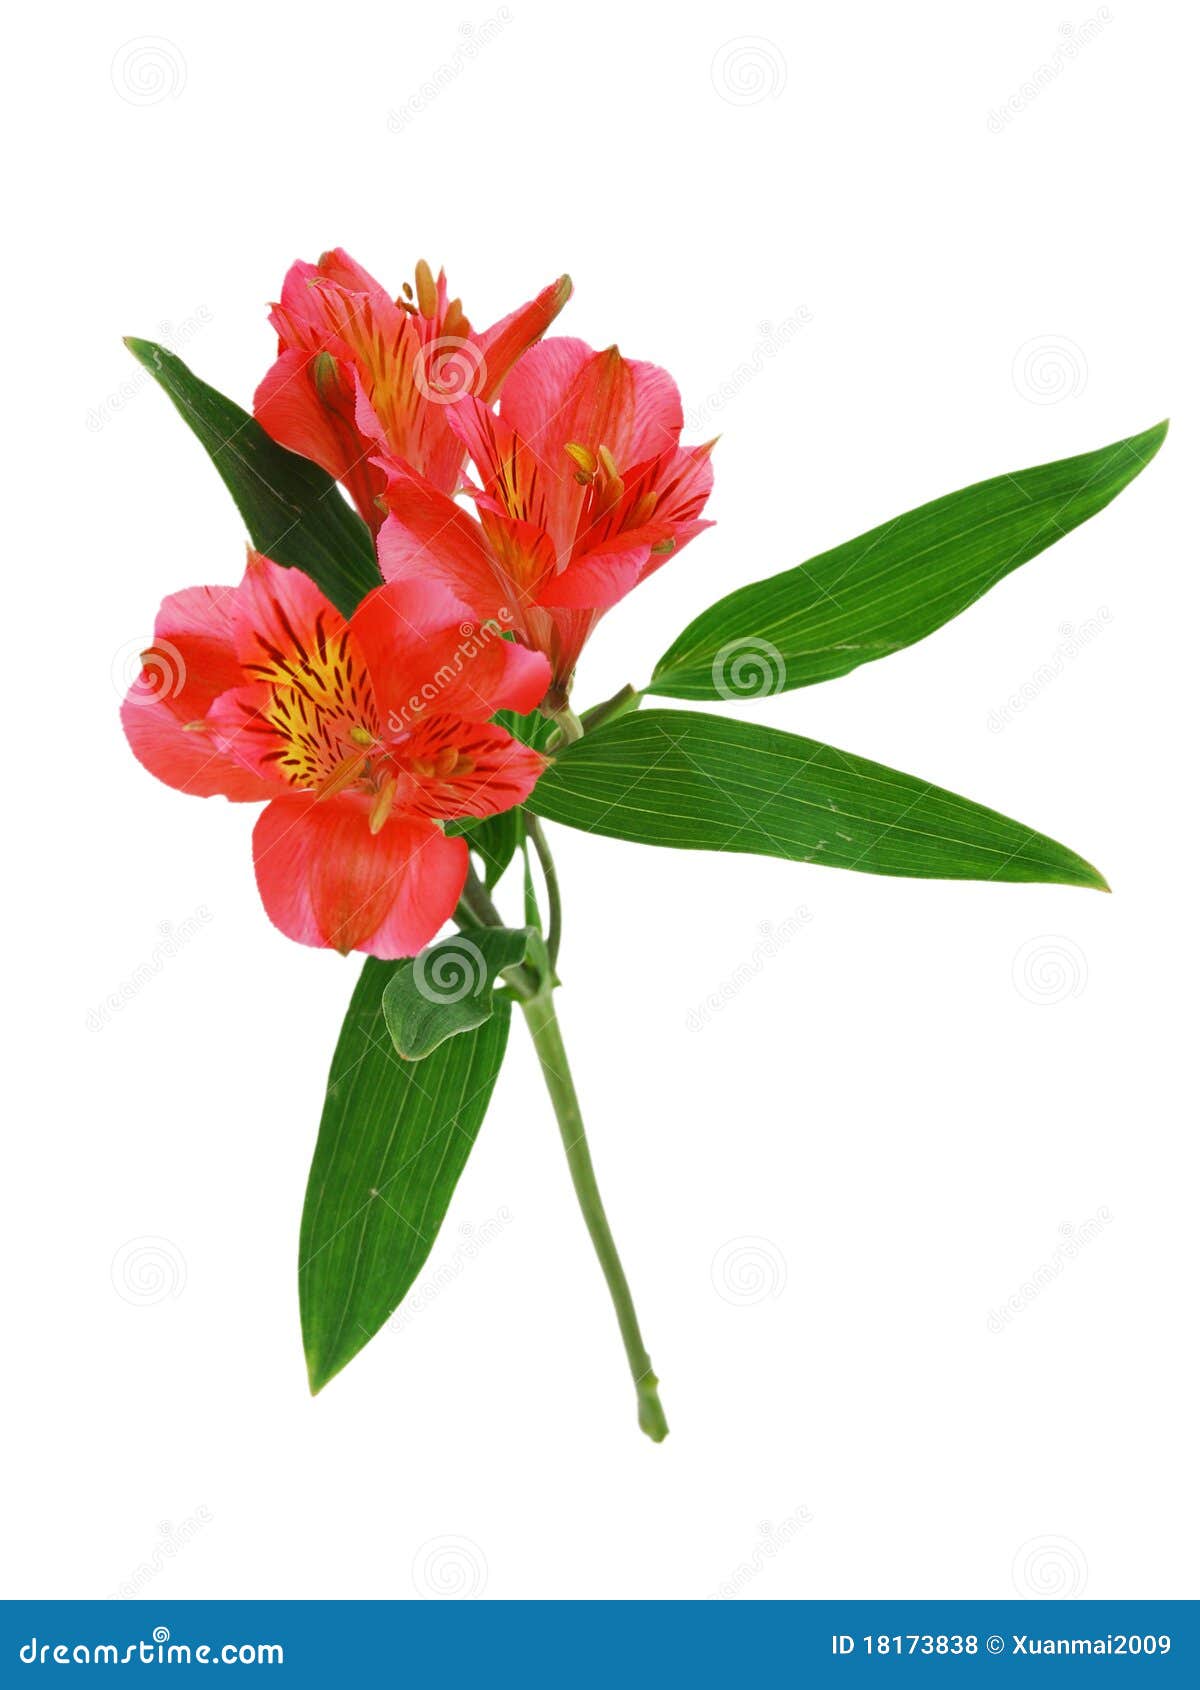 red alstroemeria lily